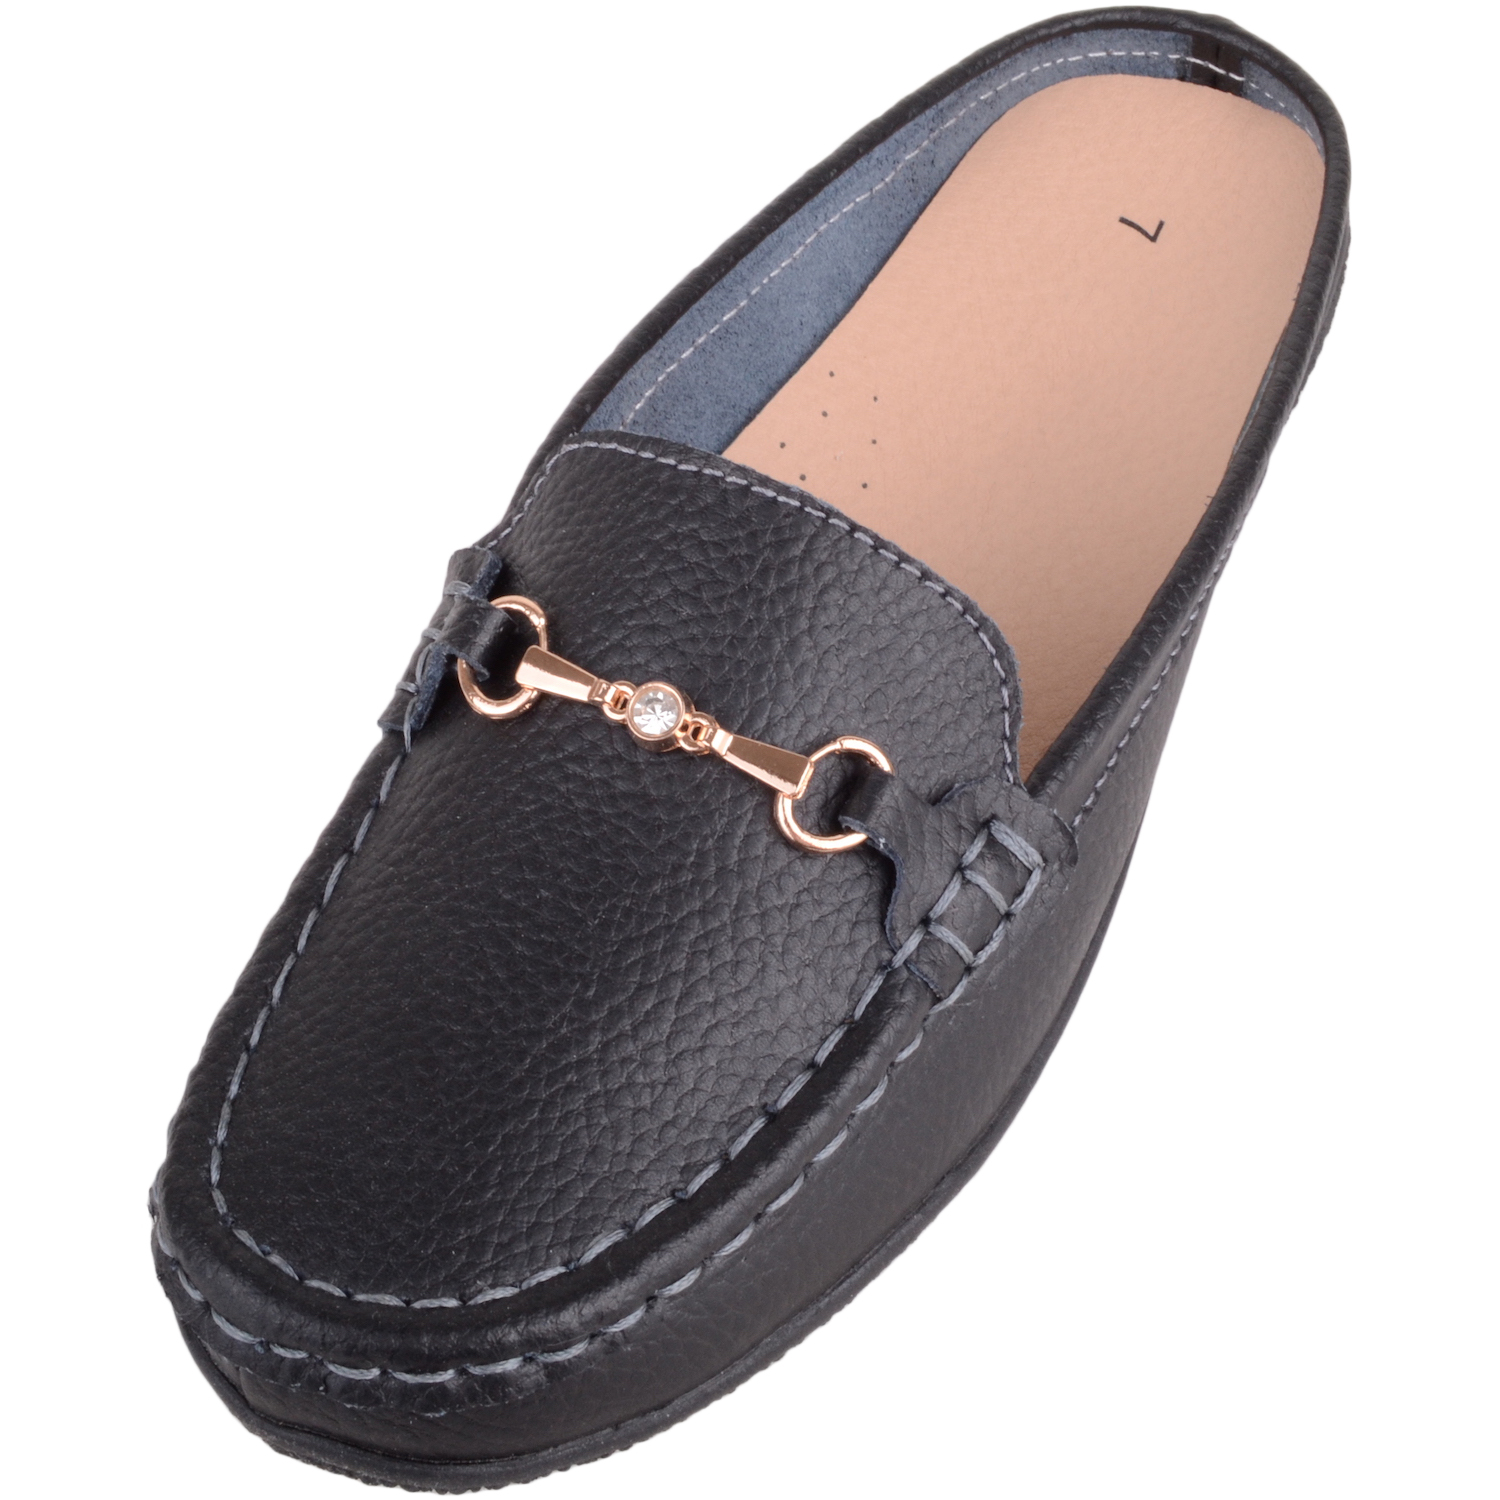 slip on ladies leather shoes